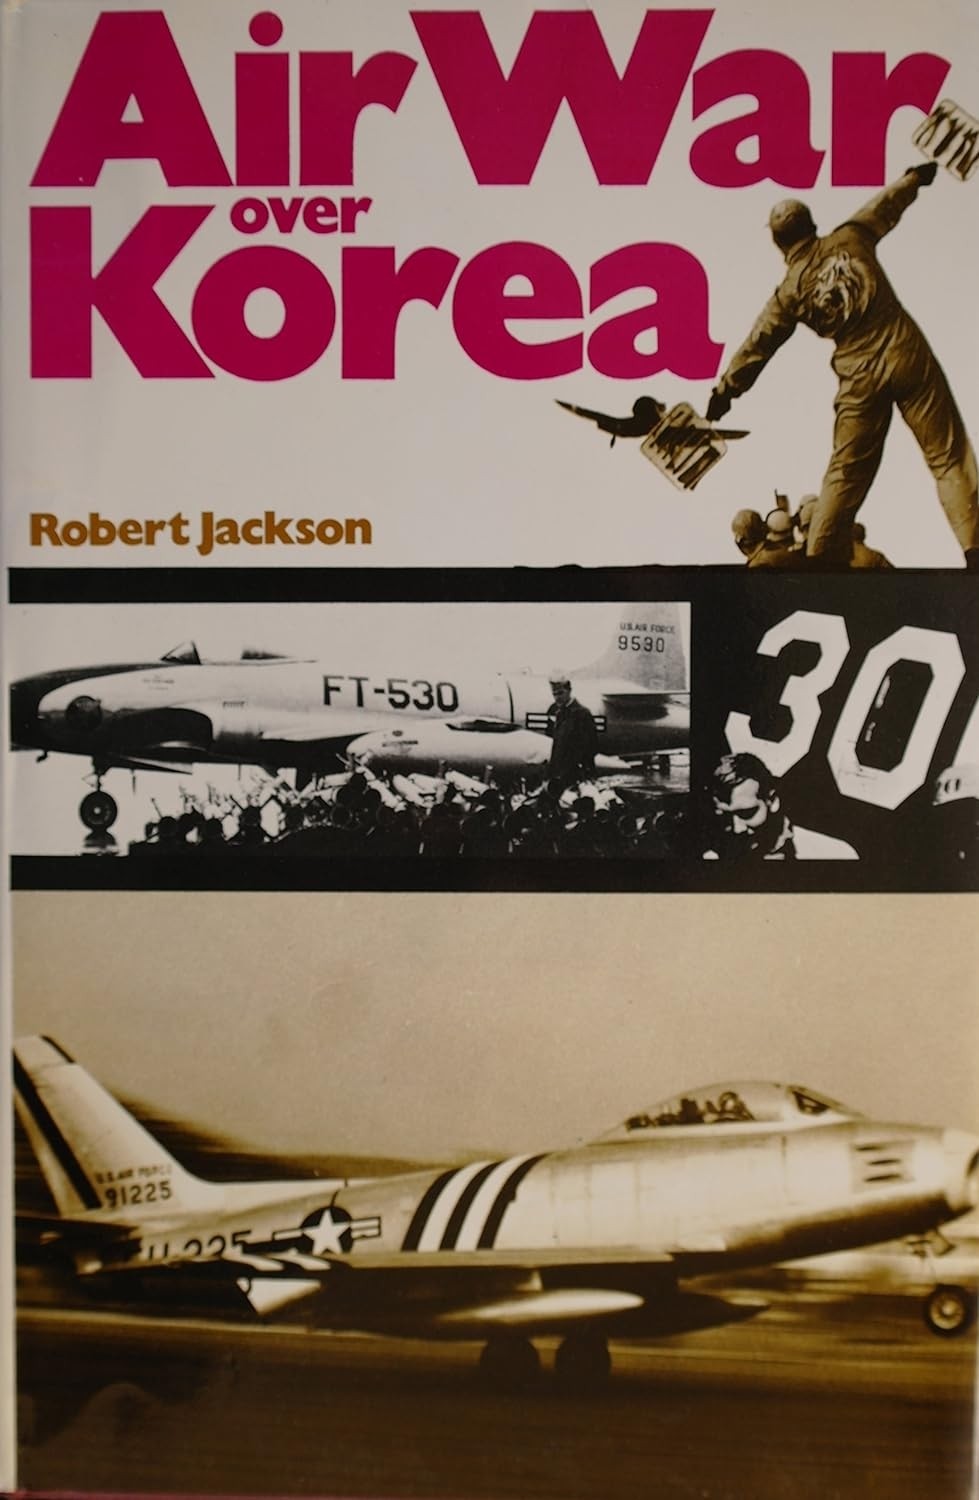 Air War Over Korea NO DUST JACKET